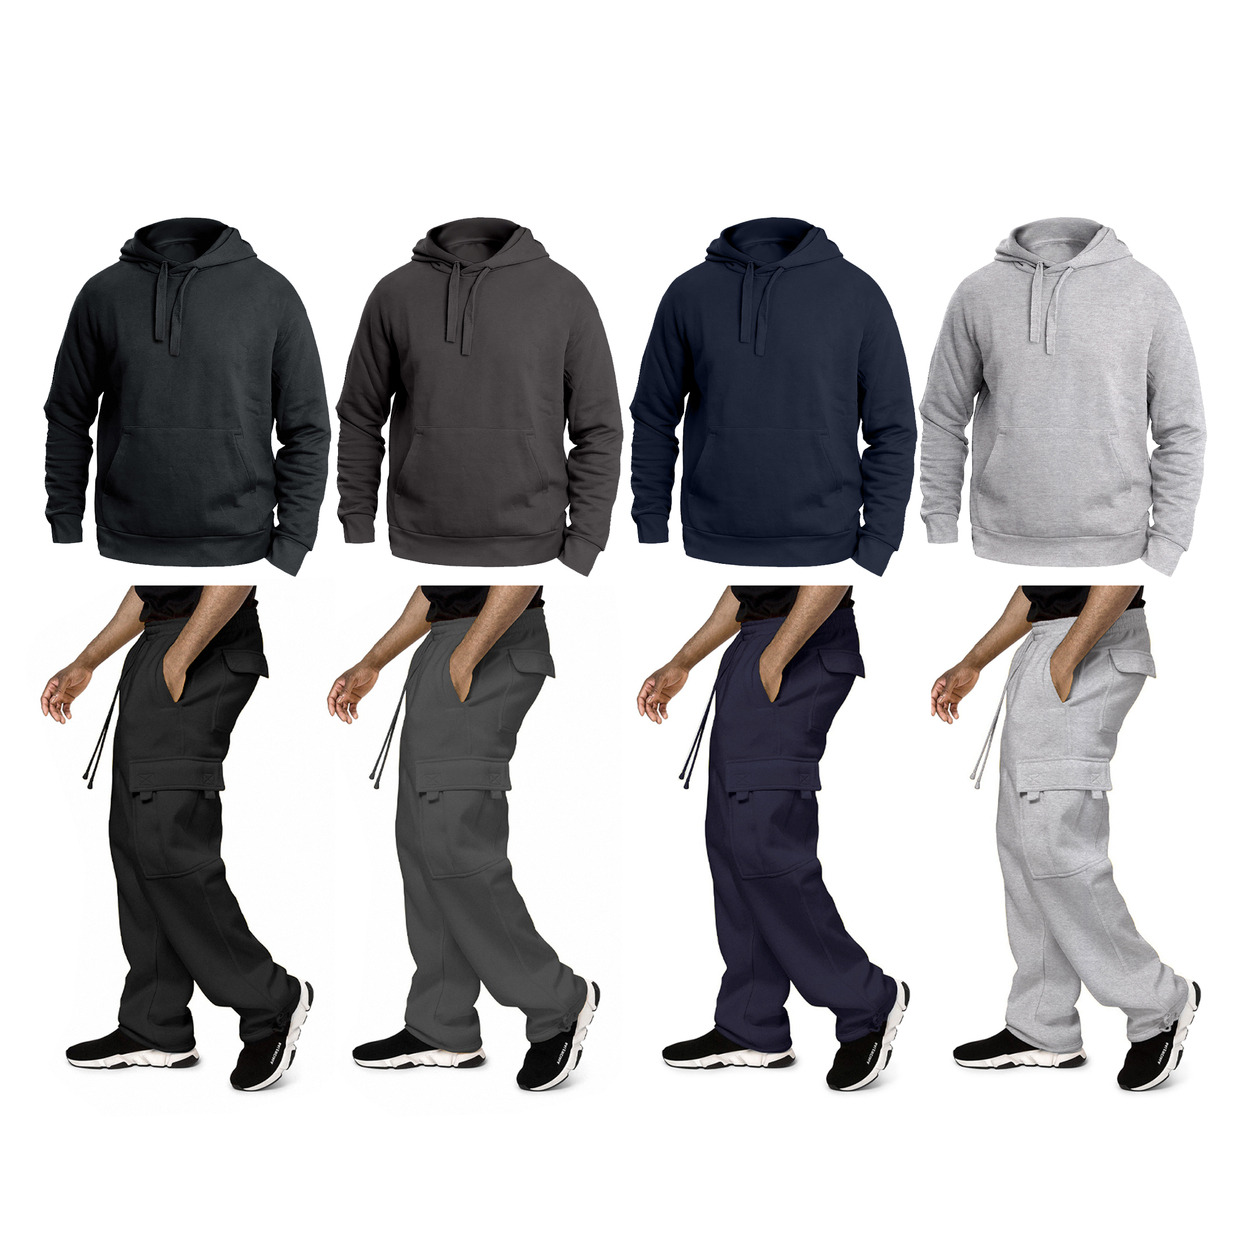 Multi-Pack: Big & Tall Men's Winter Warm Cozy Athletic Fleece Lined Multi-Pocket Cargo Sweatsuit - Charcoal, 2-pack, Medium